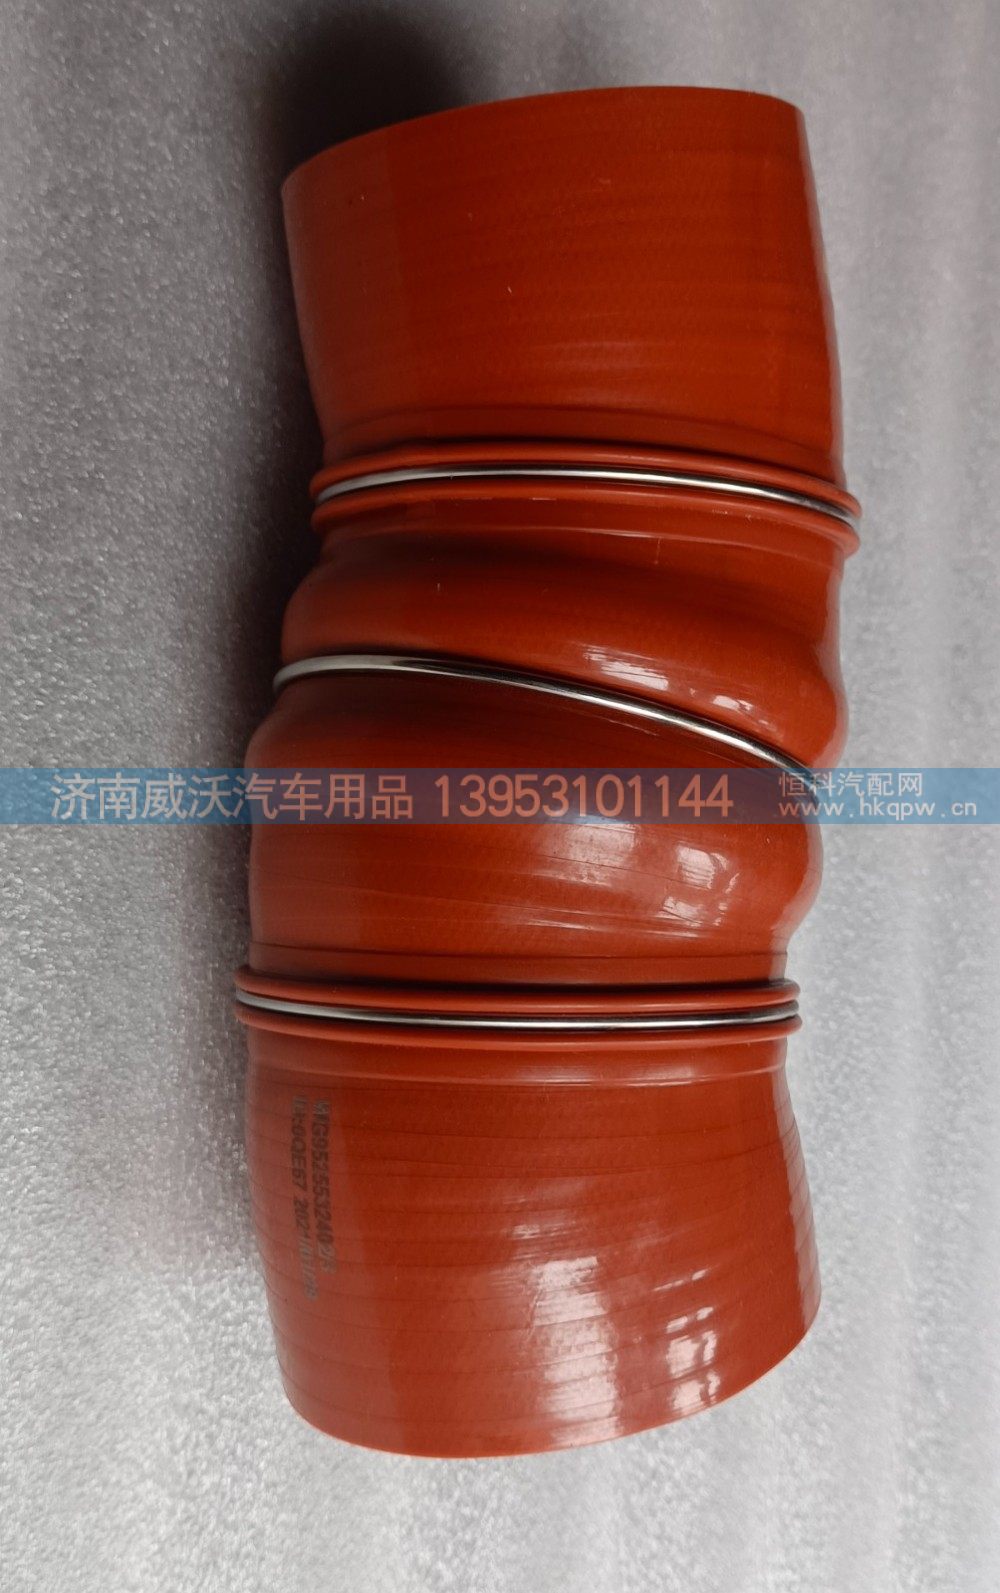 WG9525532402,中冷器出气胶管,济南市威沃汽车用品有限公司